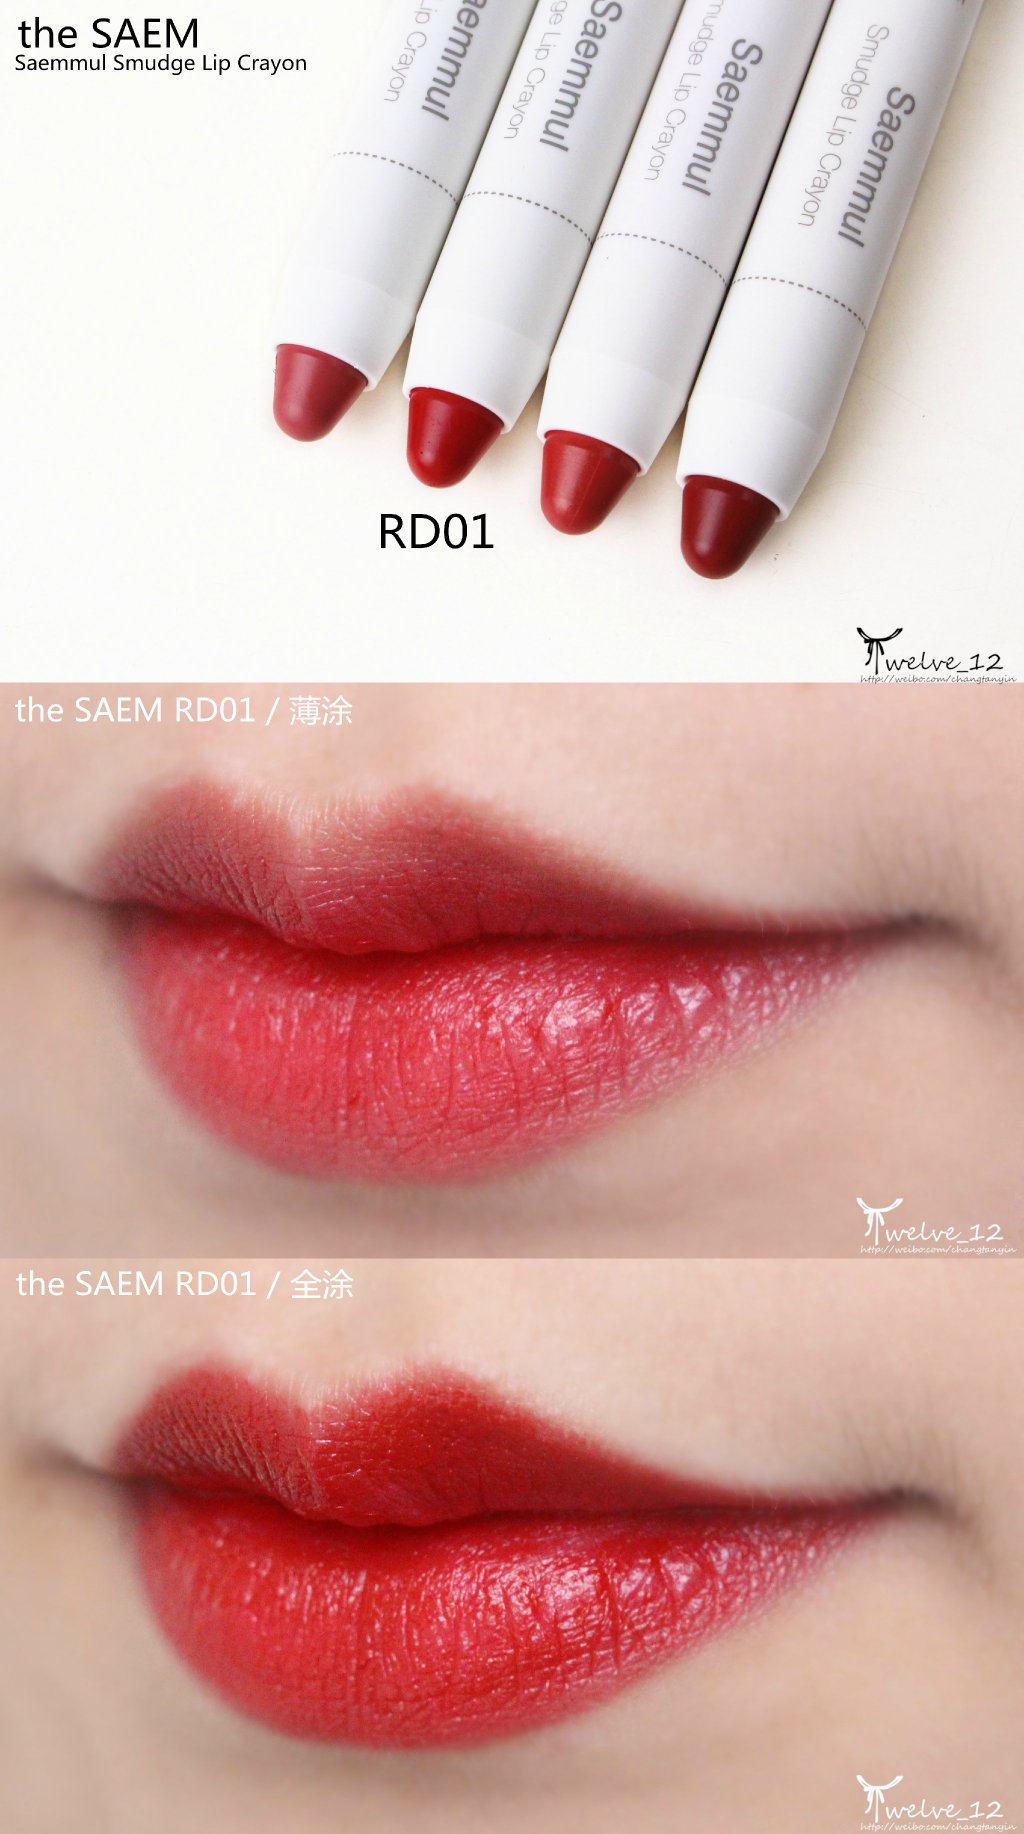 the SAEM saemmul smudge lip crayon 气垫蜡笔唇膏笔BE01、RD01、OR02、RD02试色